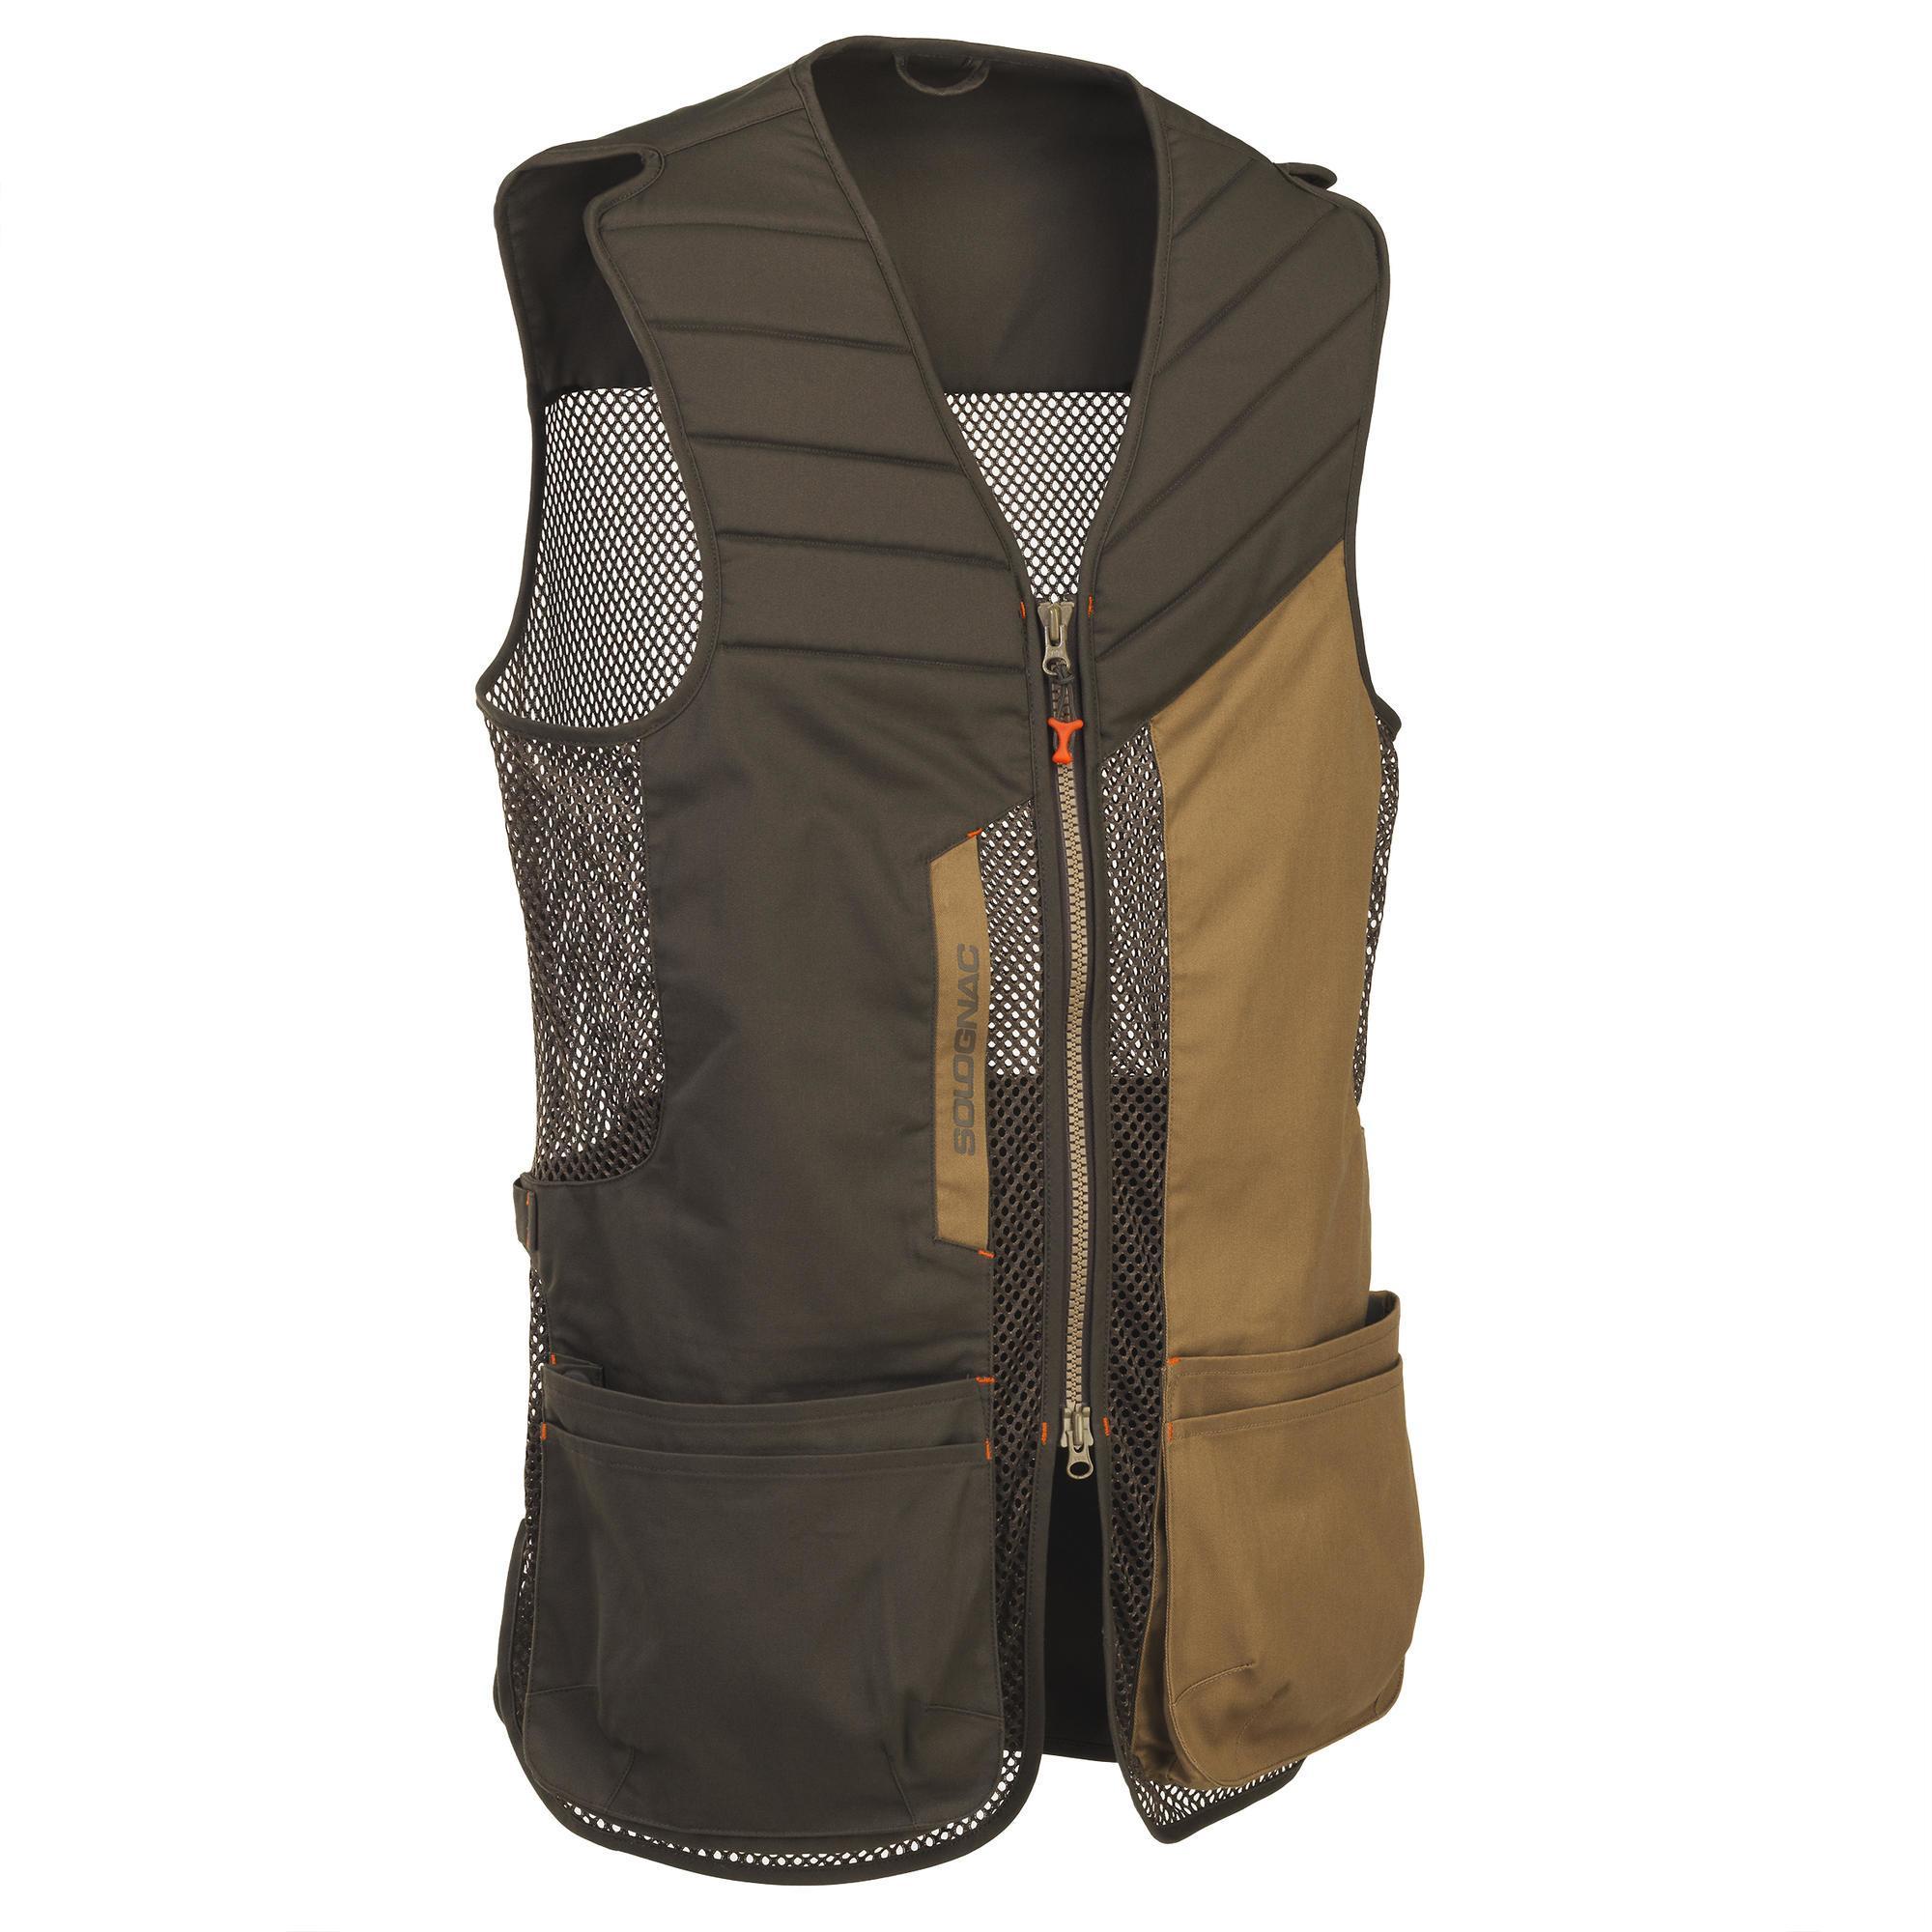 decathlon shooting vest